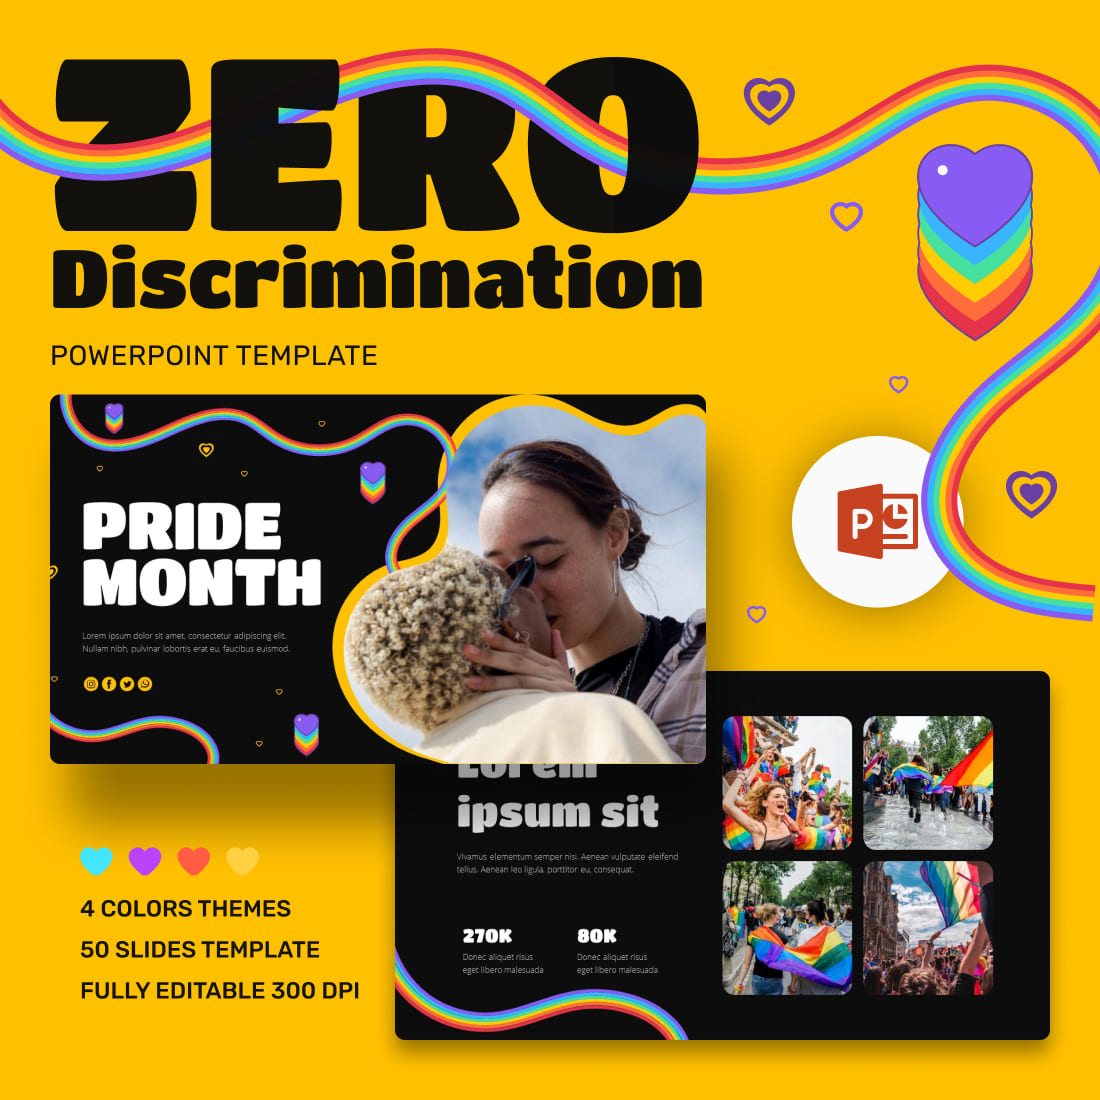 Zero Discrimination PowerPoint Template.